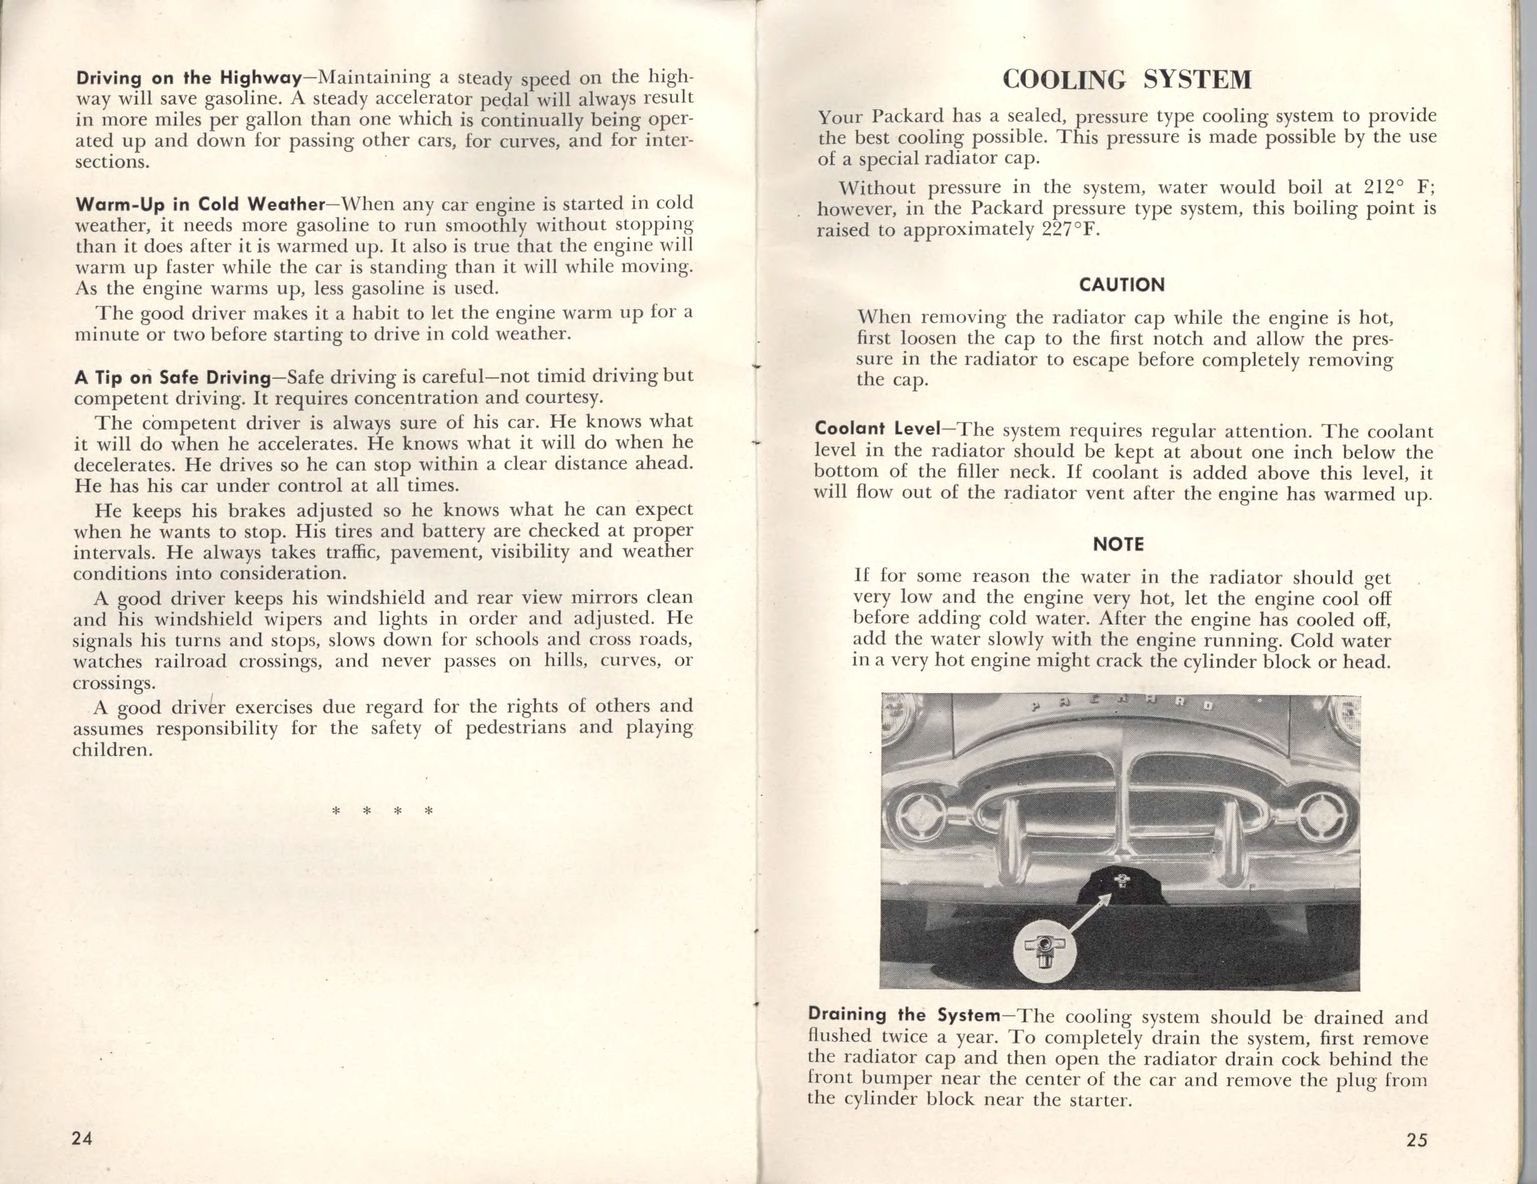 1951_Packard_Manual-24-25